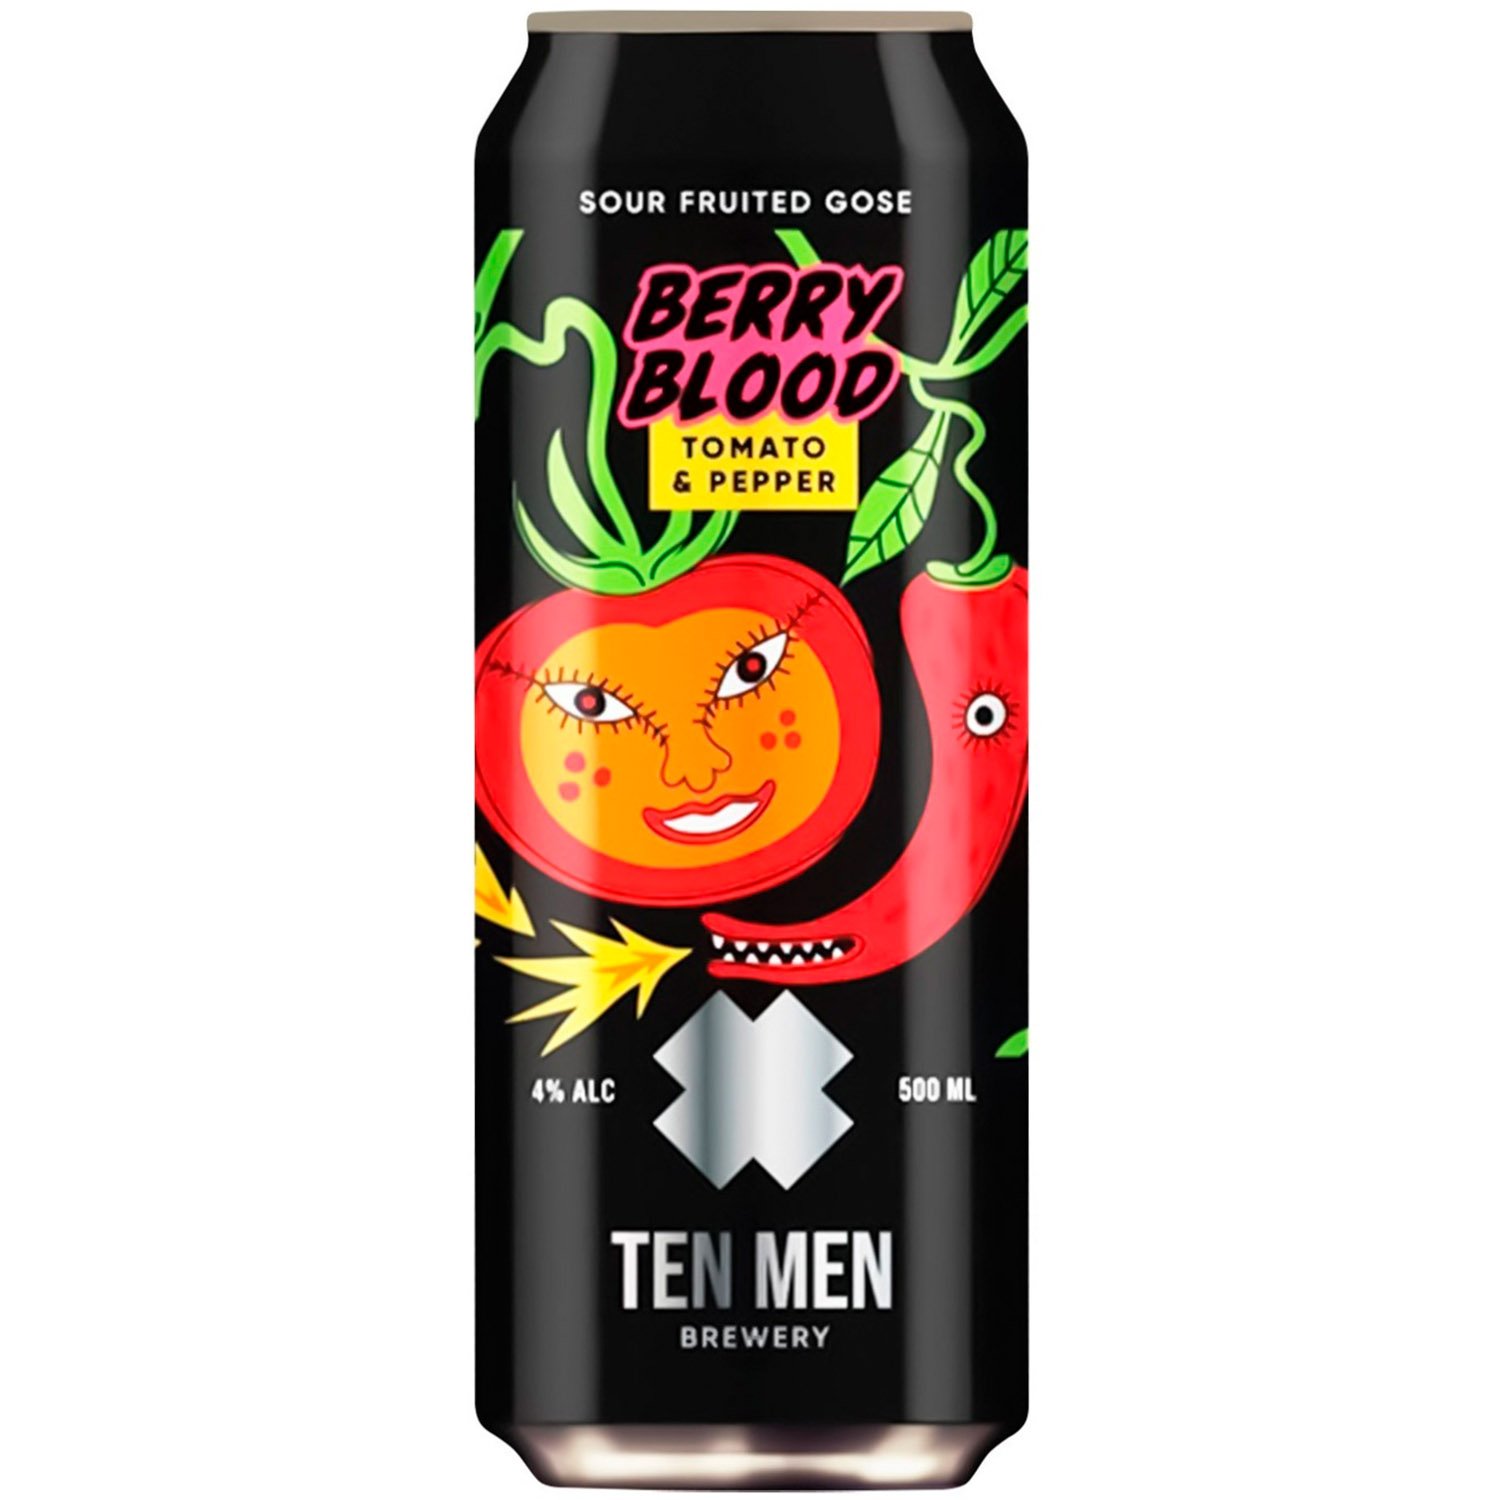 Пиво Ten Men Brewery Berry Blood Tomato&Pepper Sour Fruited Gose, напівтемне, 4%, з/б ,0,5 л - фото 1